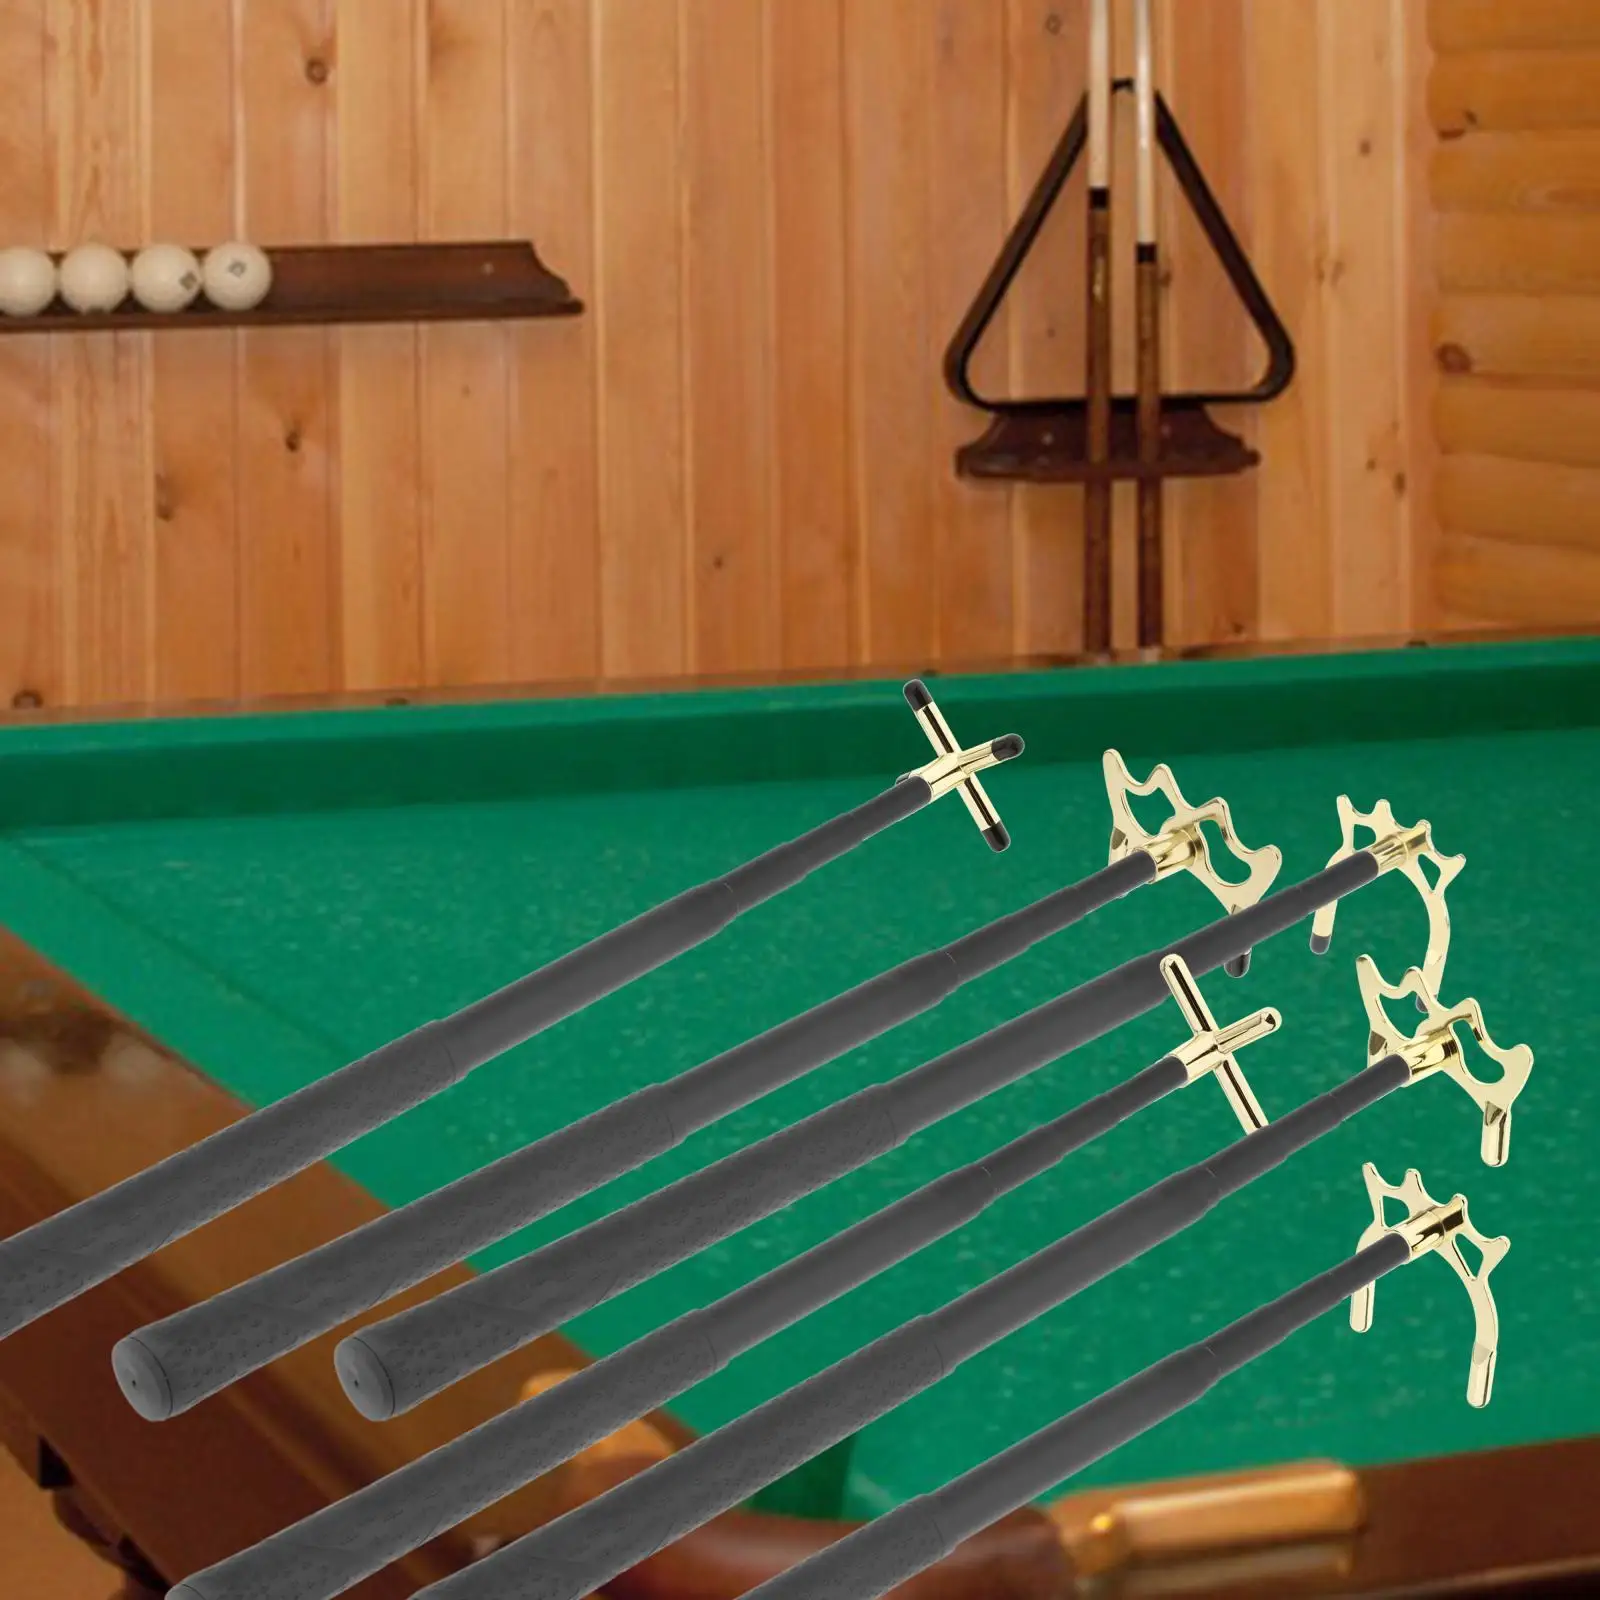 Retractable Pool Bridge Sticks, Billiards Cue Sticks with Removable Bridge Head, Anti Slip Handle Billiard Pool Cue Accessory